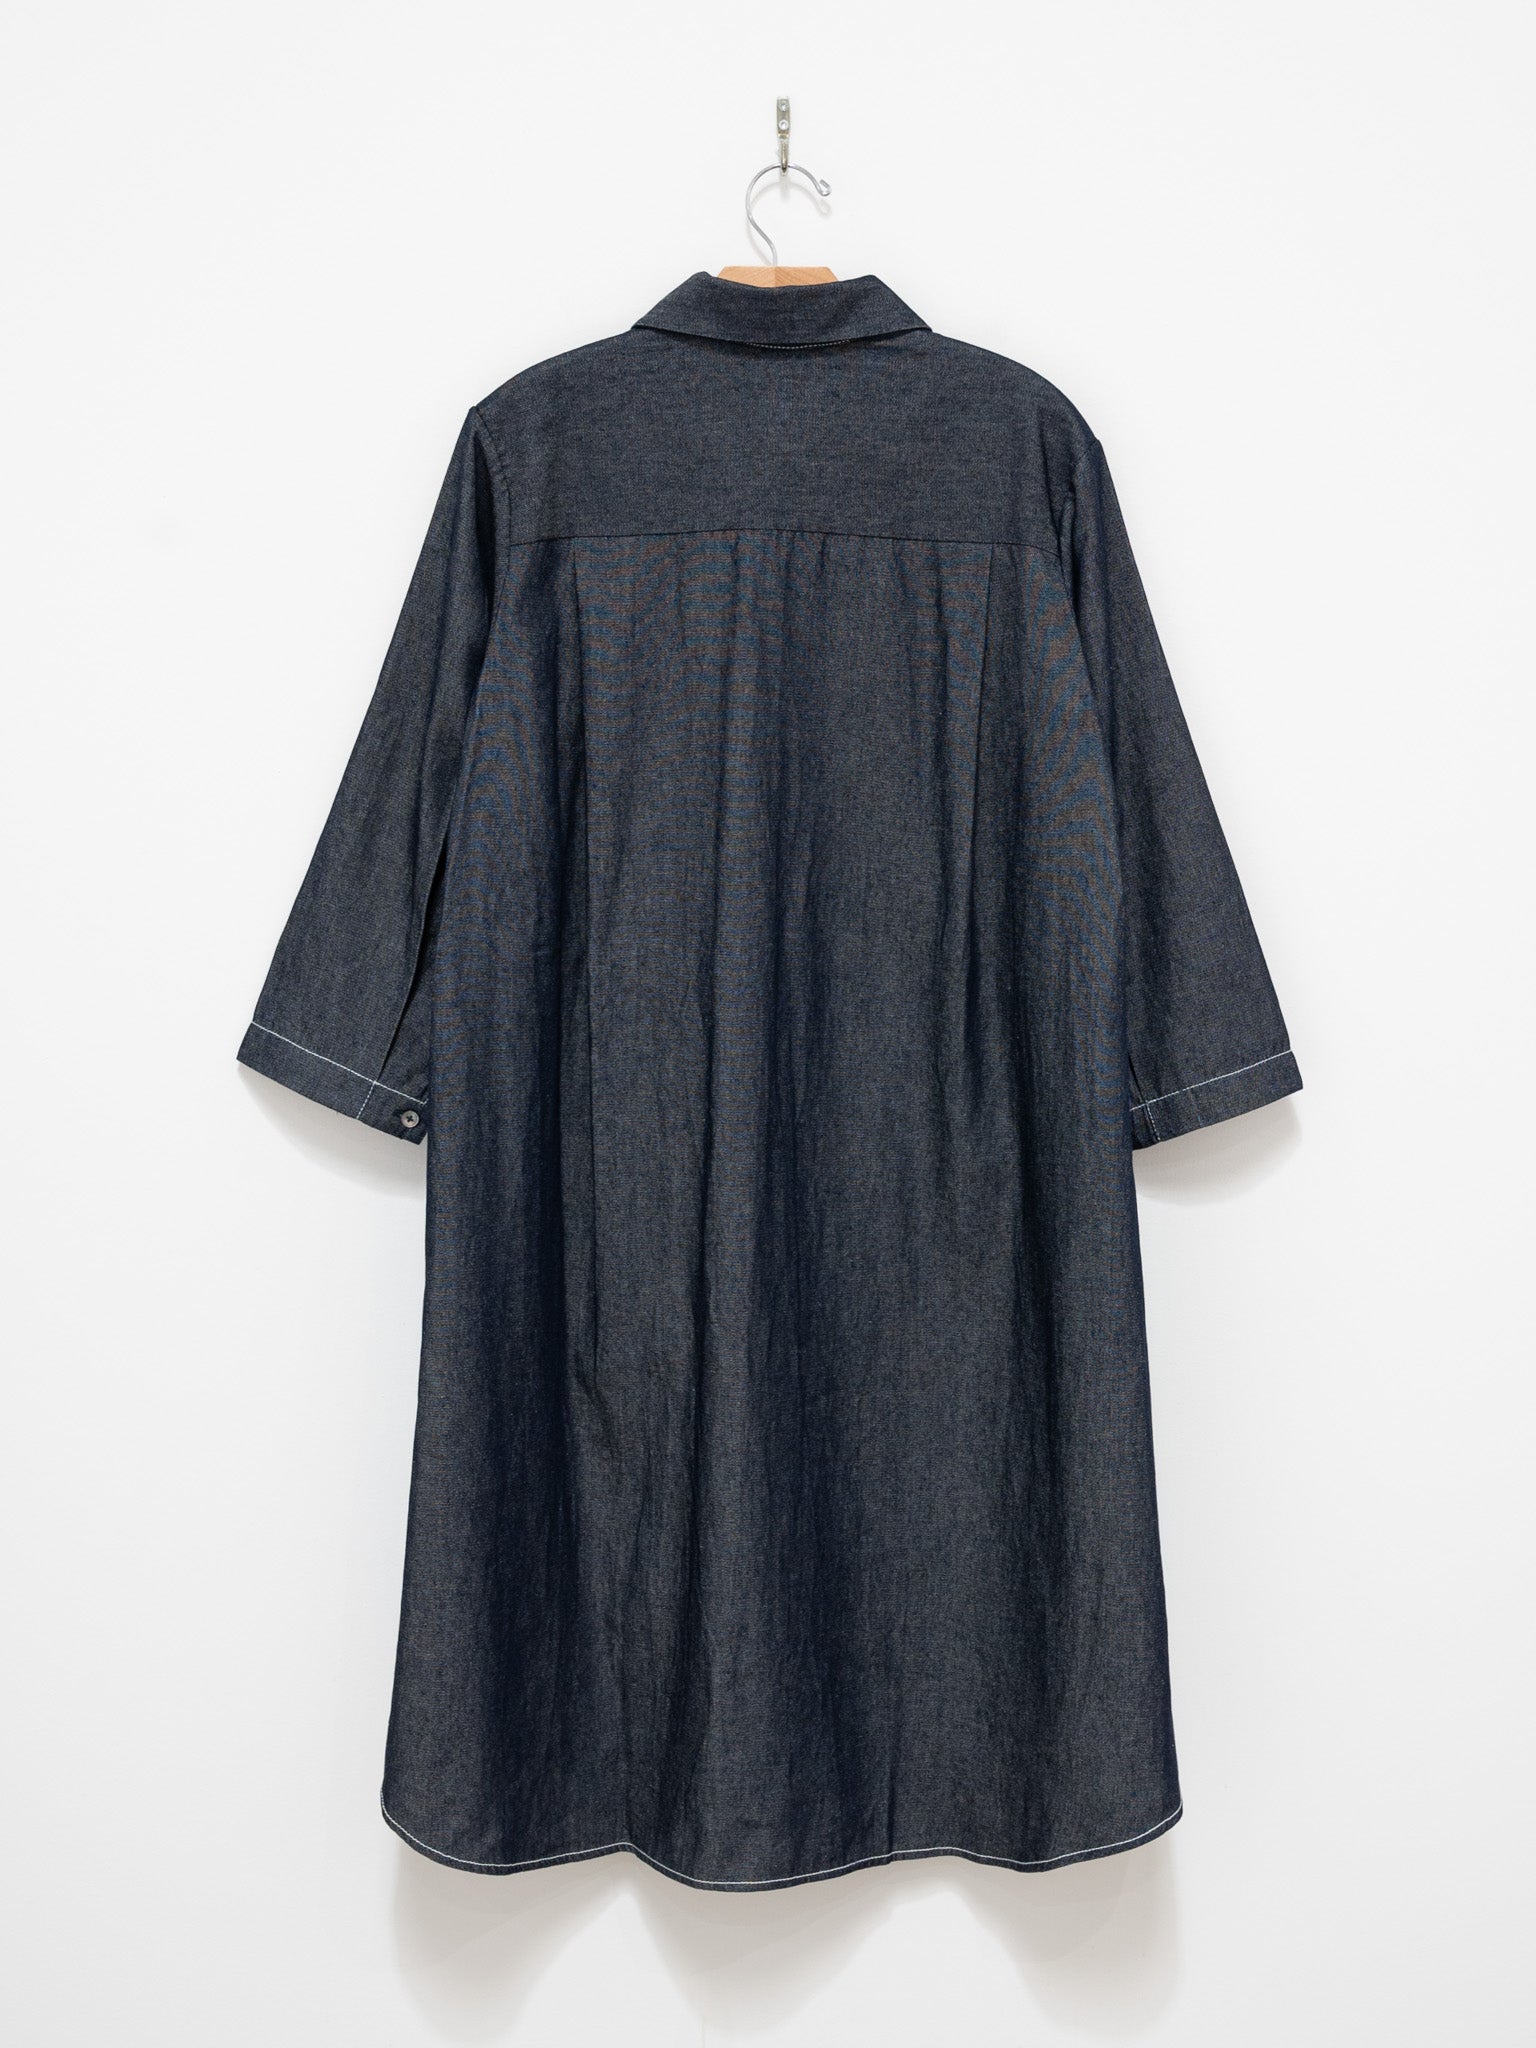 Namu Shop - Jan Machenhauer Giselle Shirt Dress - No.4 Denim